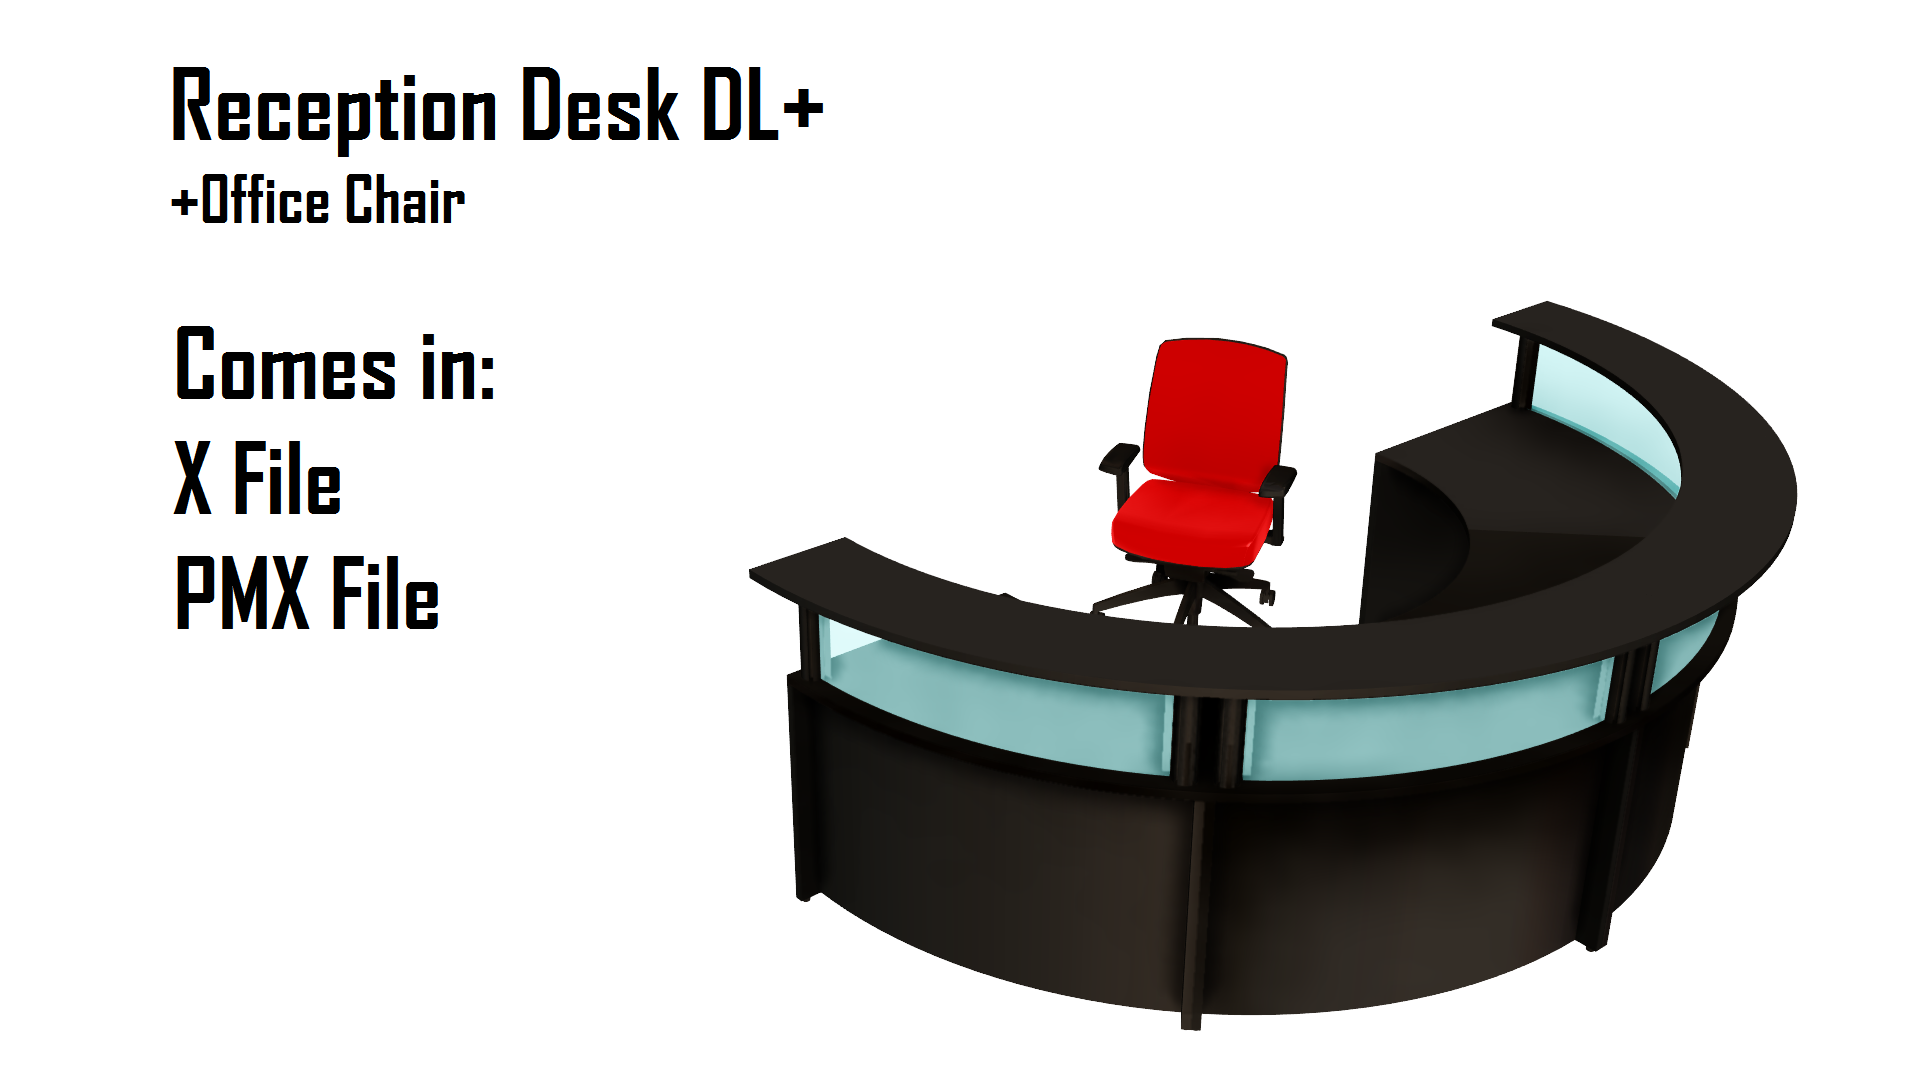 MMD] Reception Desk DL+ (+Office Chair) by Haztract on DeviantArt